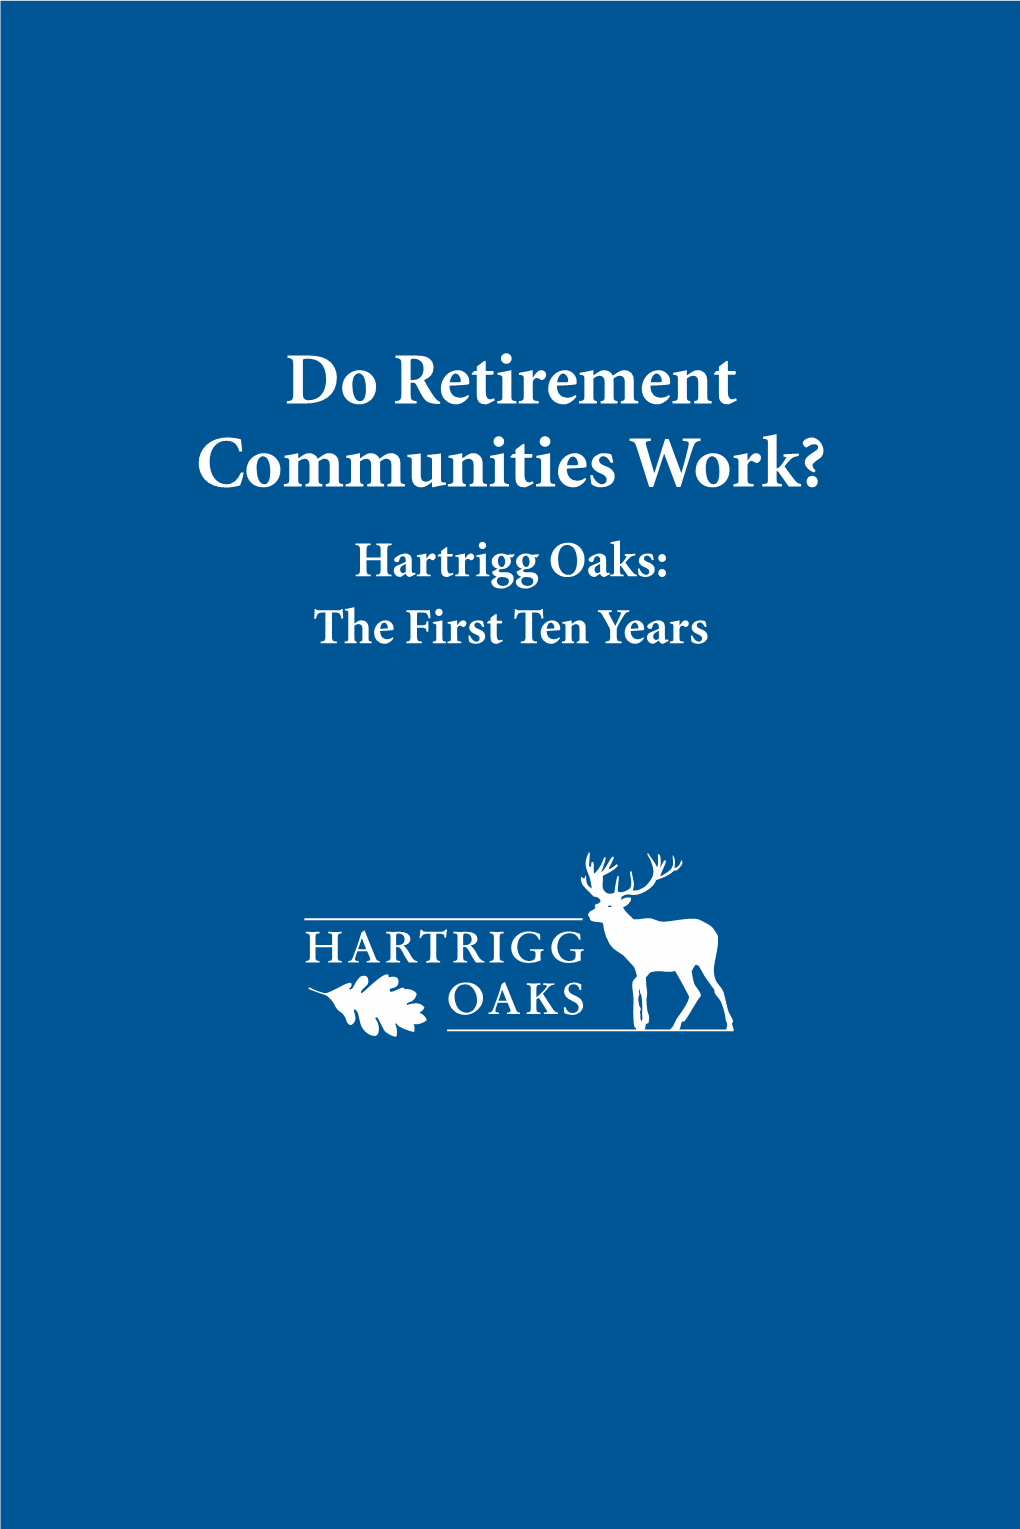 Do Retirement Communities Work? Work? Communities